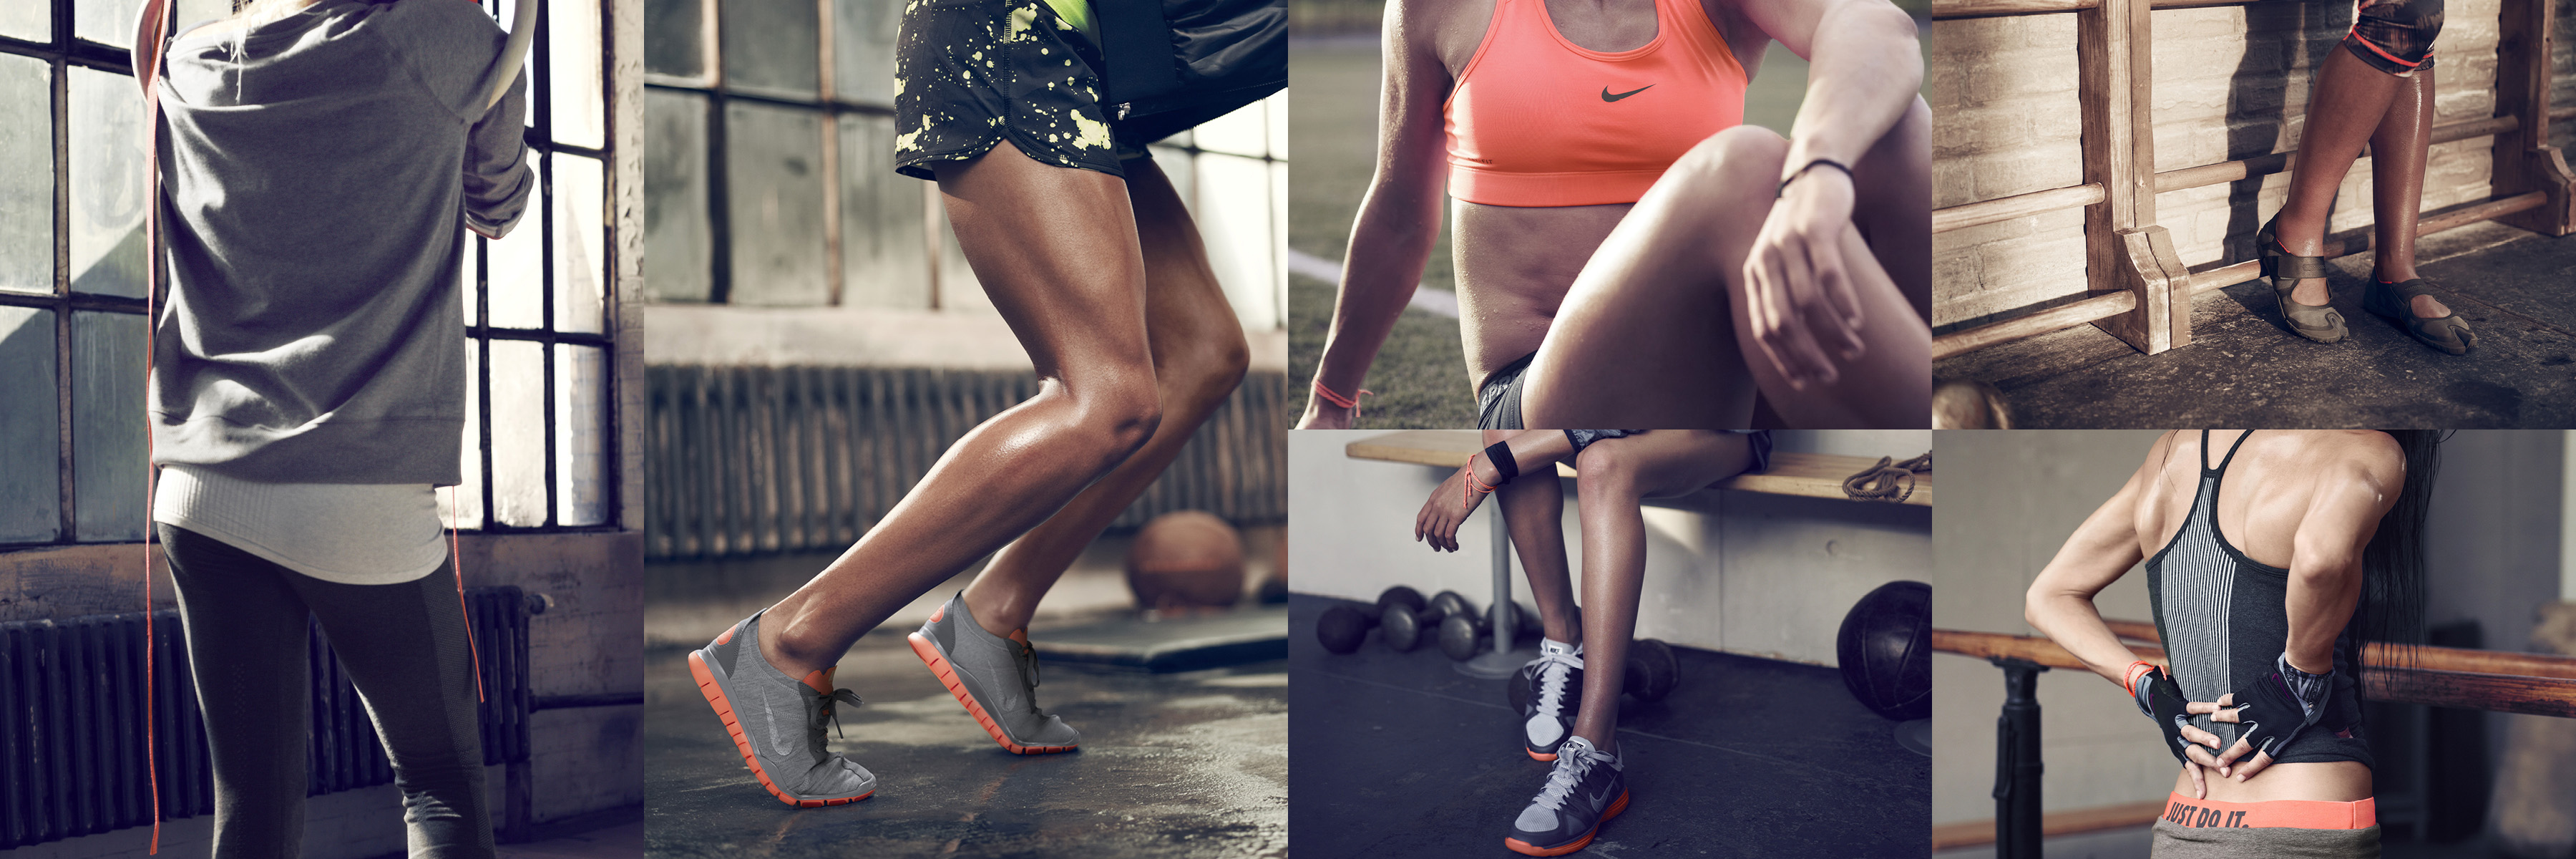 Nike Women Training Wallpaper